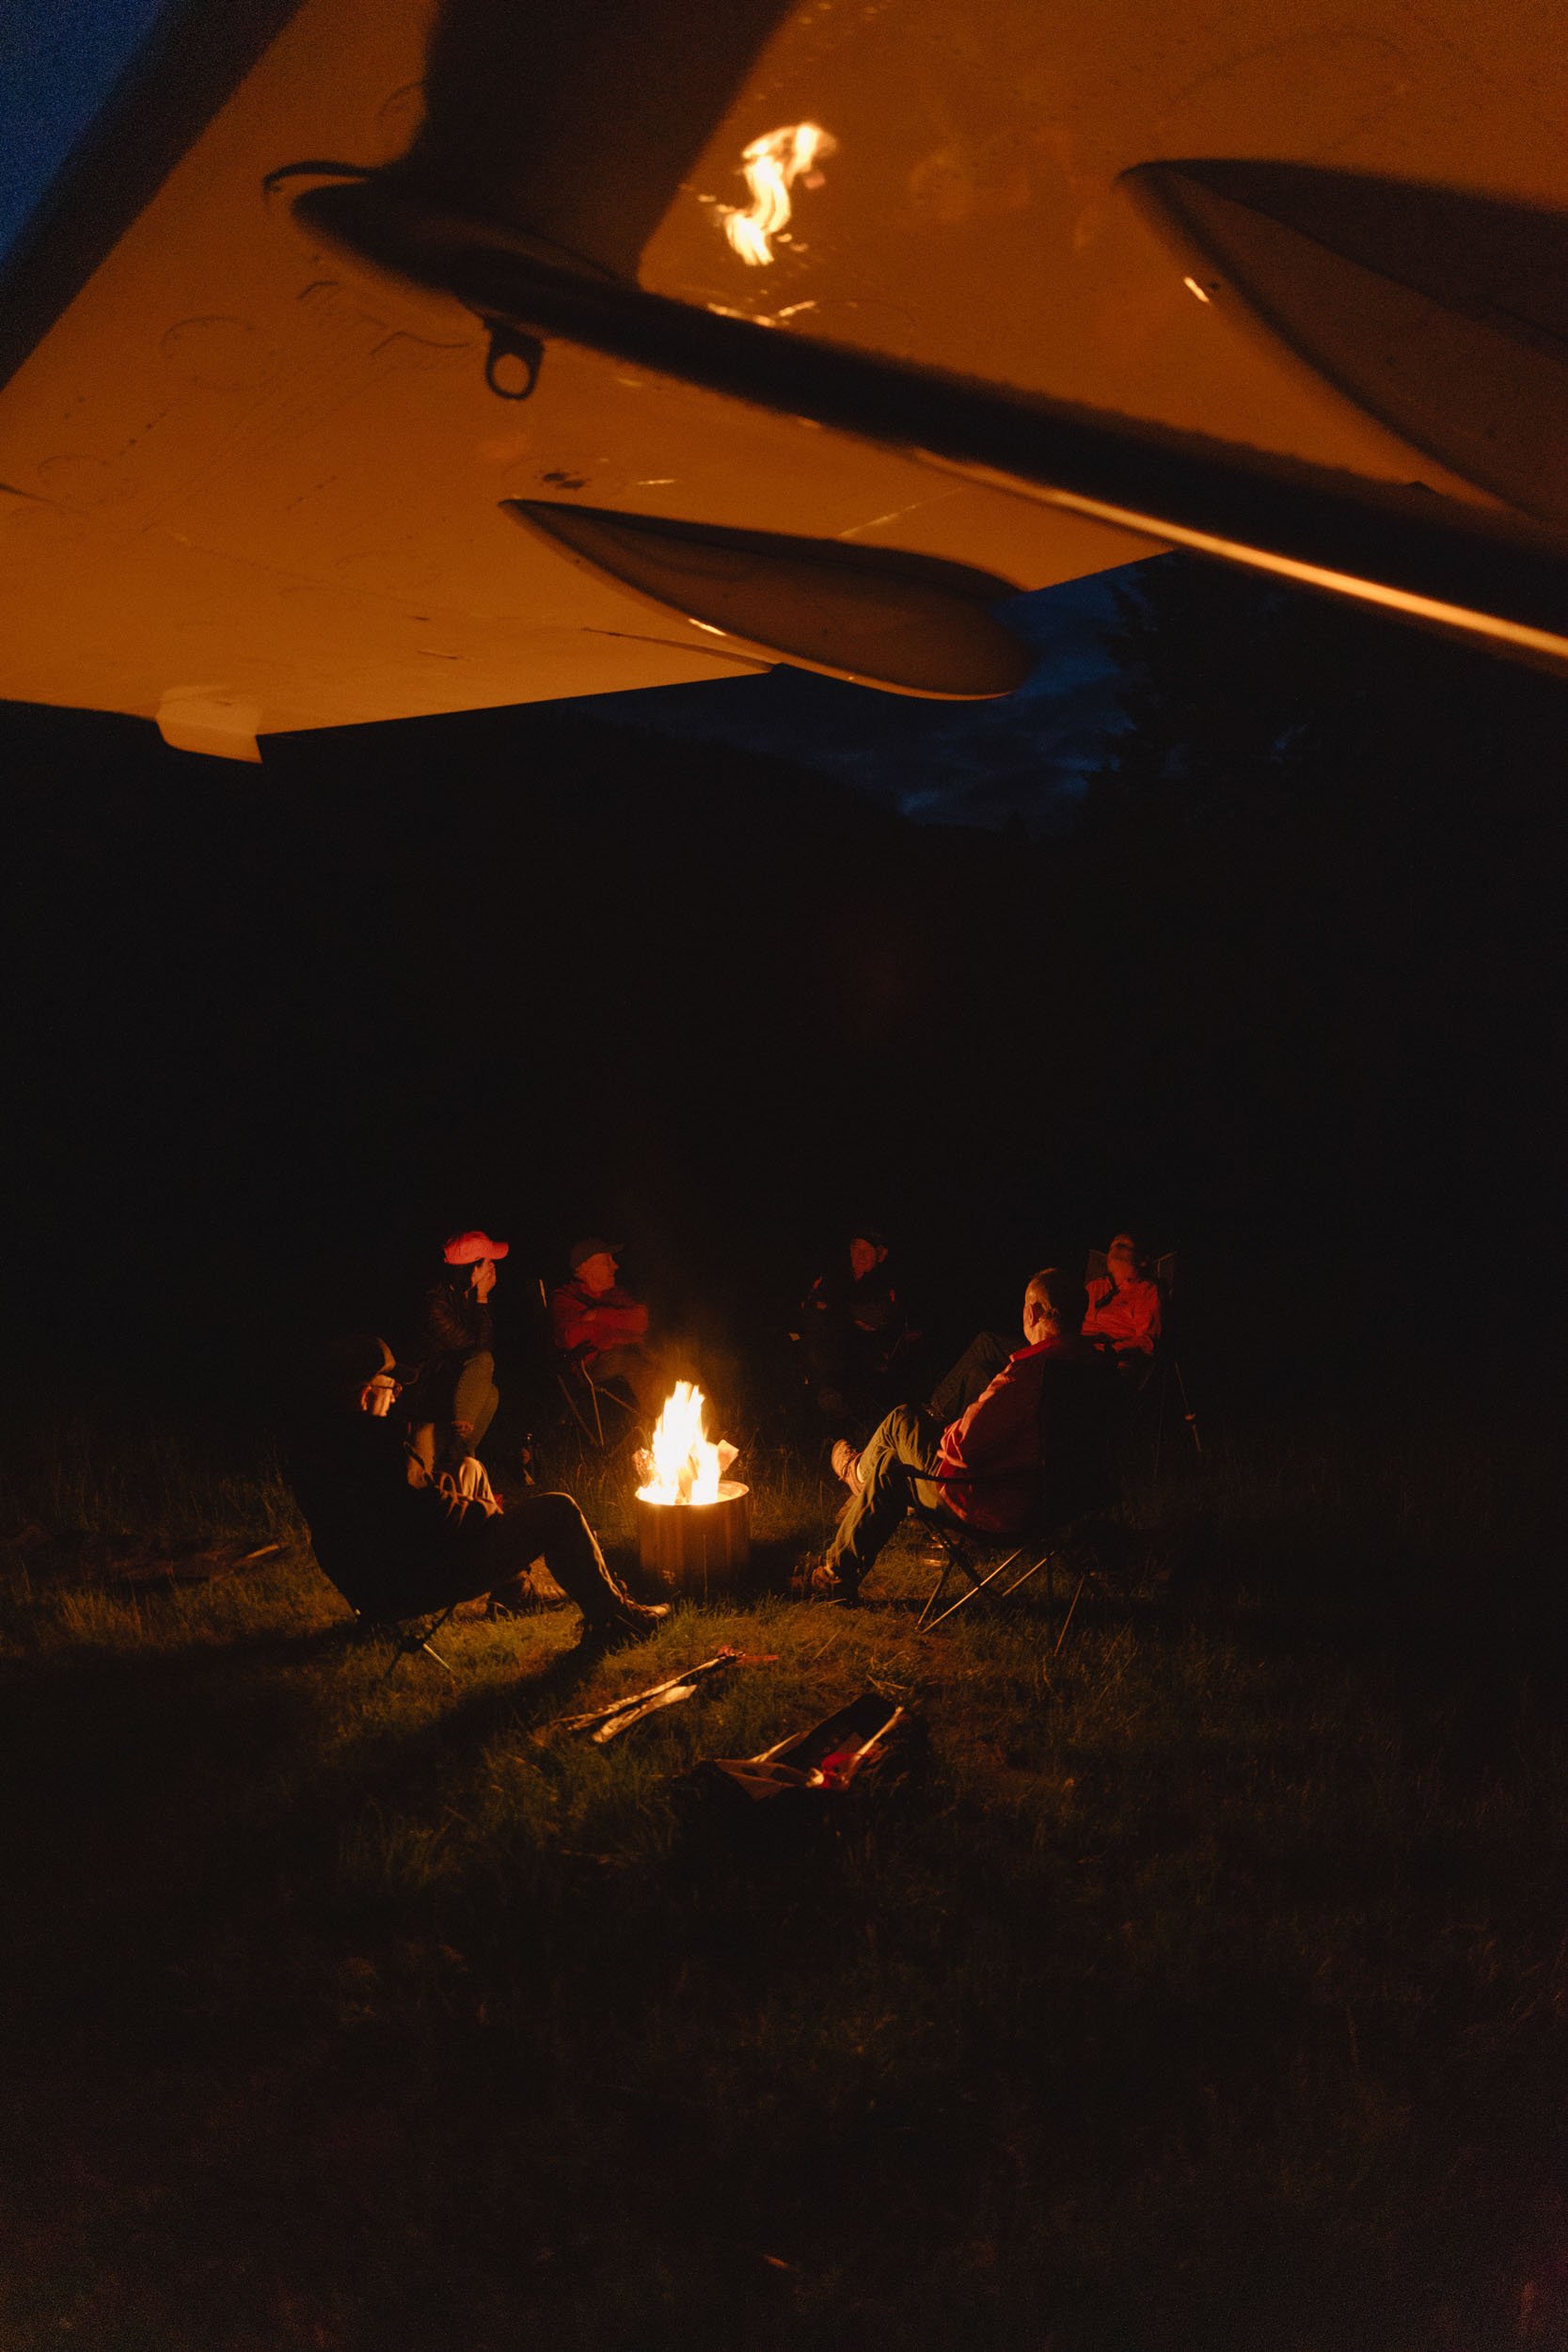 Aero camping / Bloomberg Pursuits